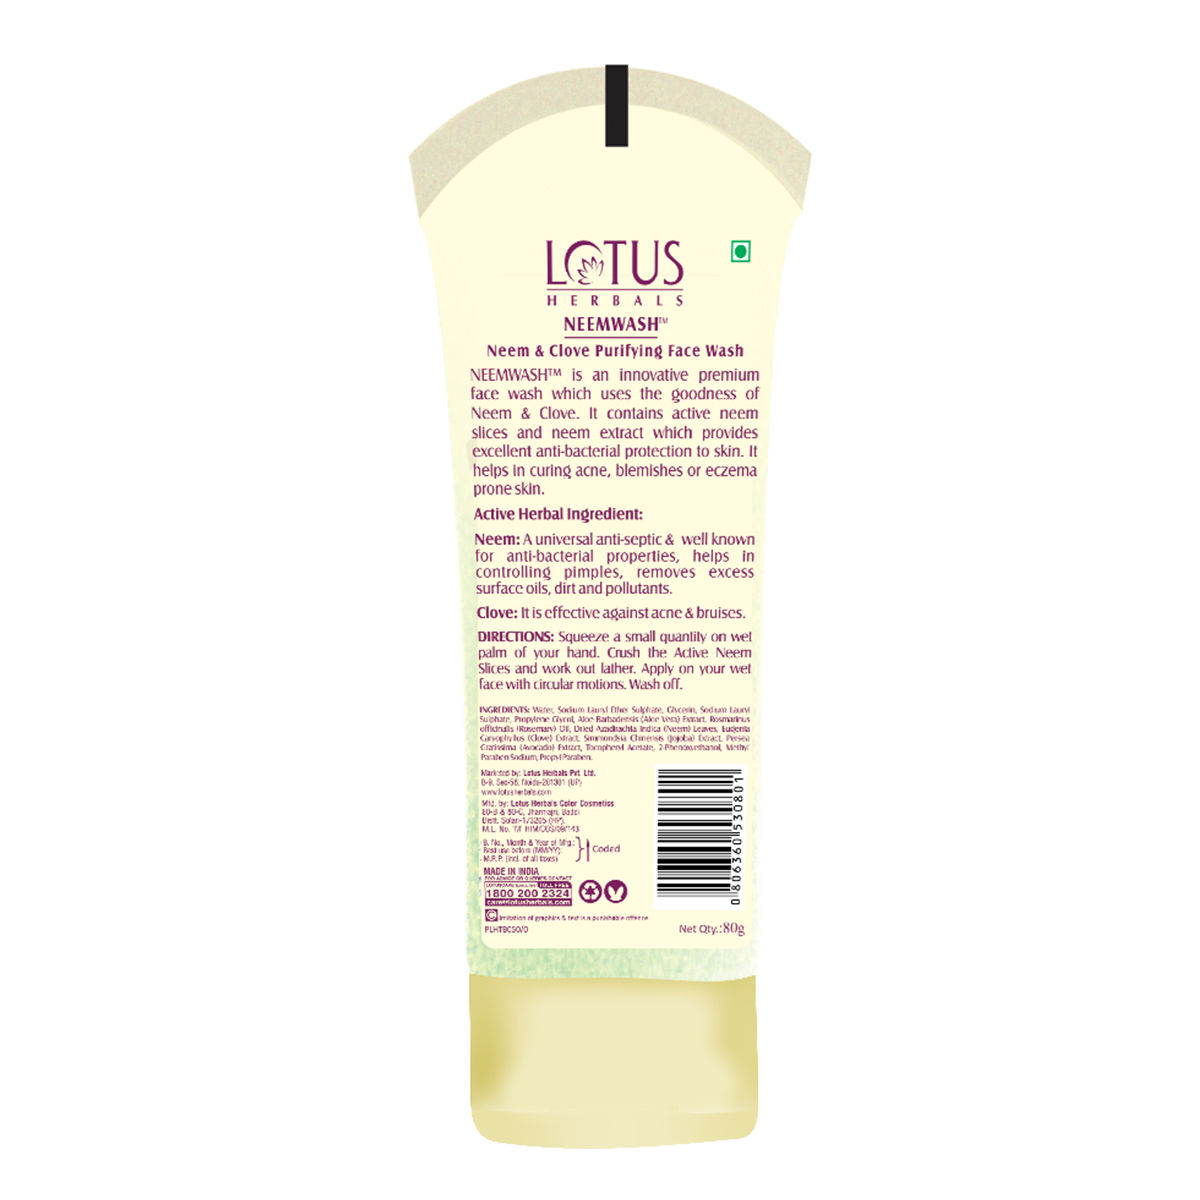 Lotus Herbals Neemwash Neem & Clove Purifying Face Wash, 80 gm, Pack of 1 